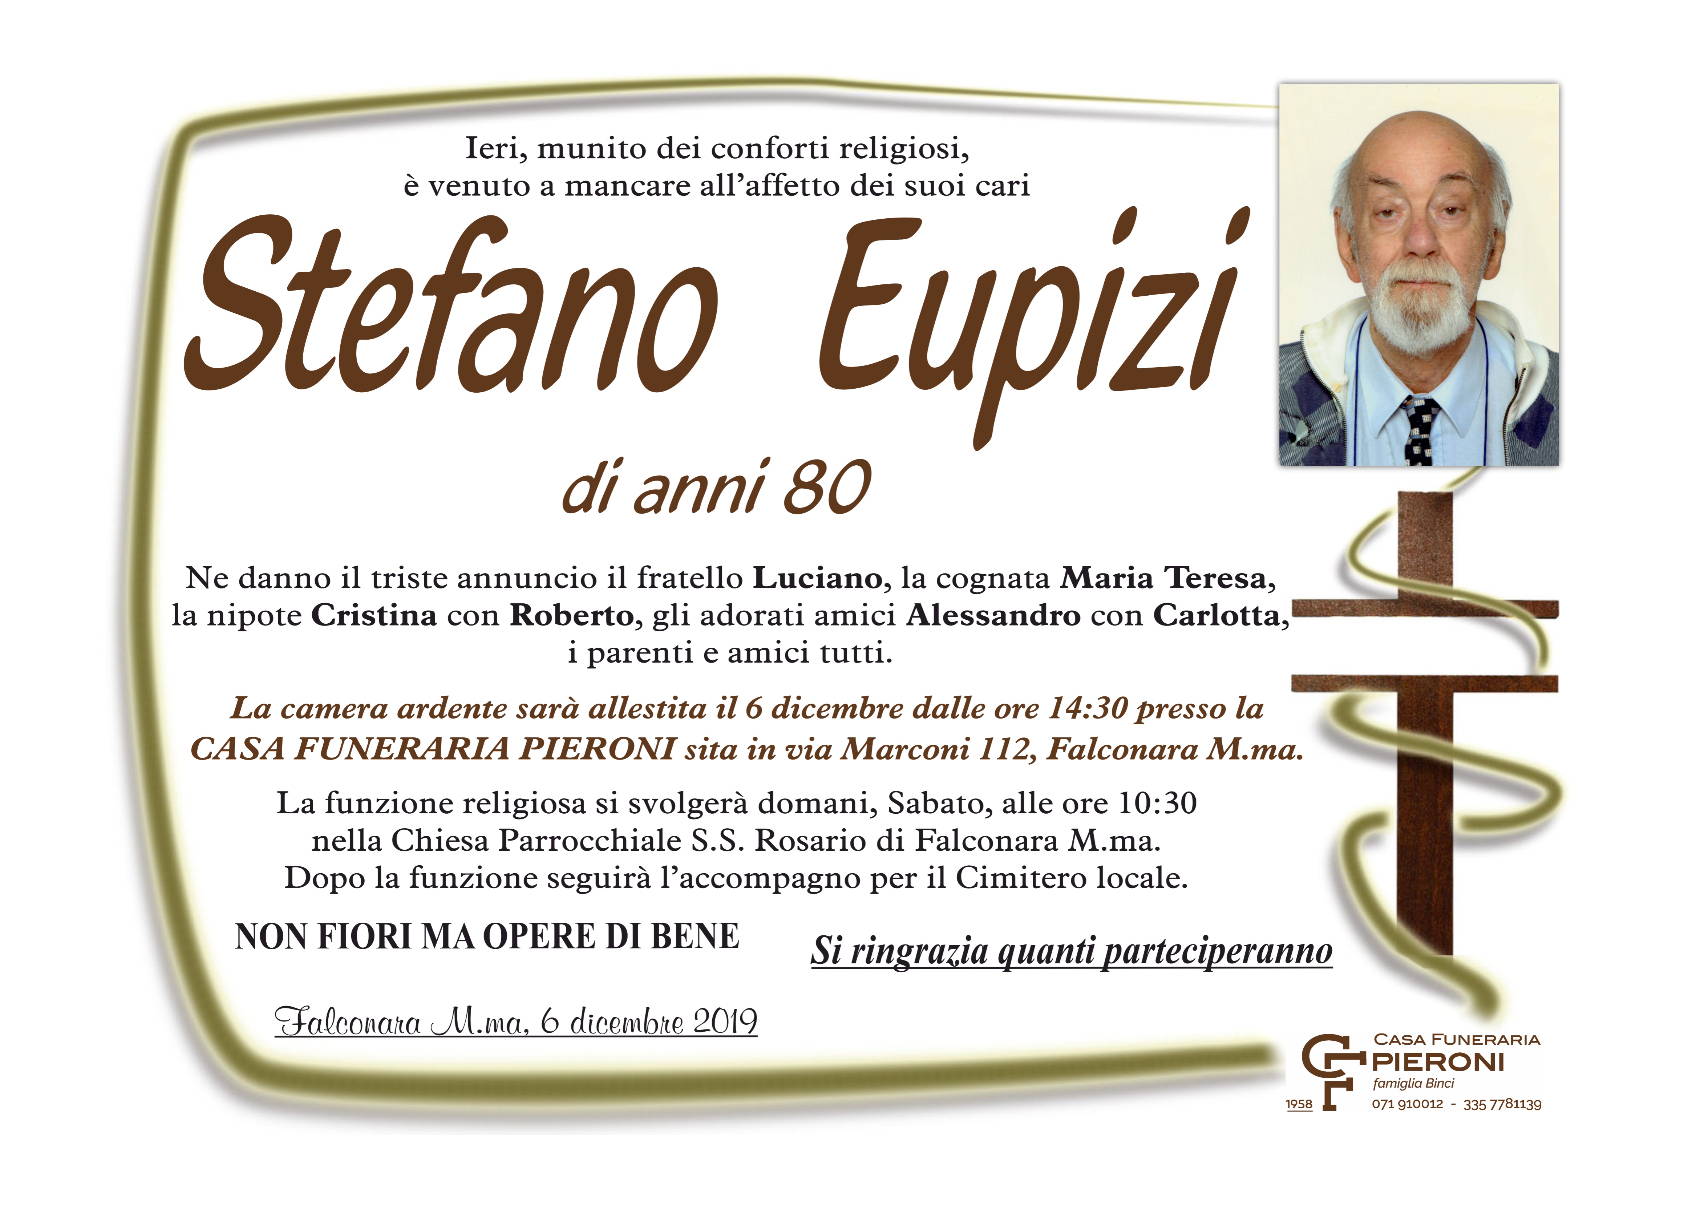 Stefano Eupizi